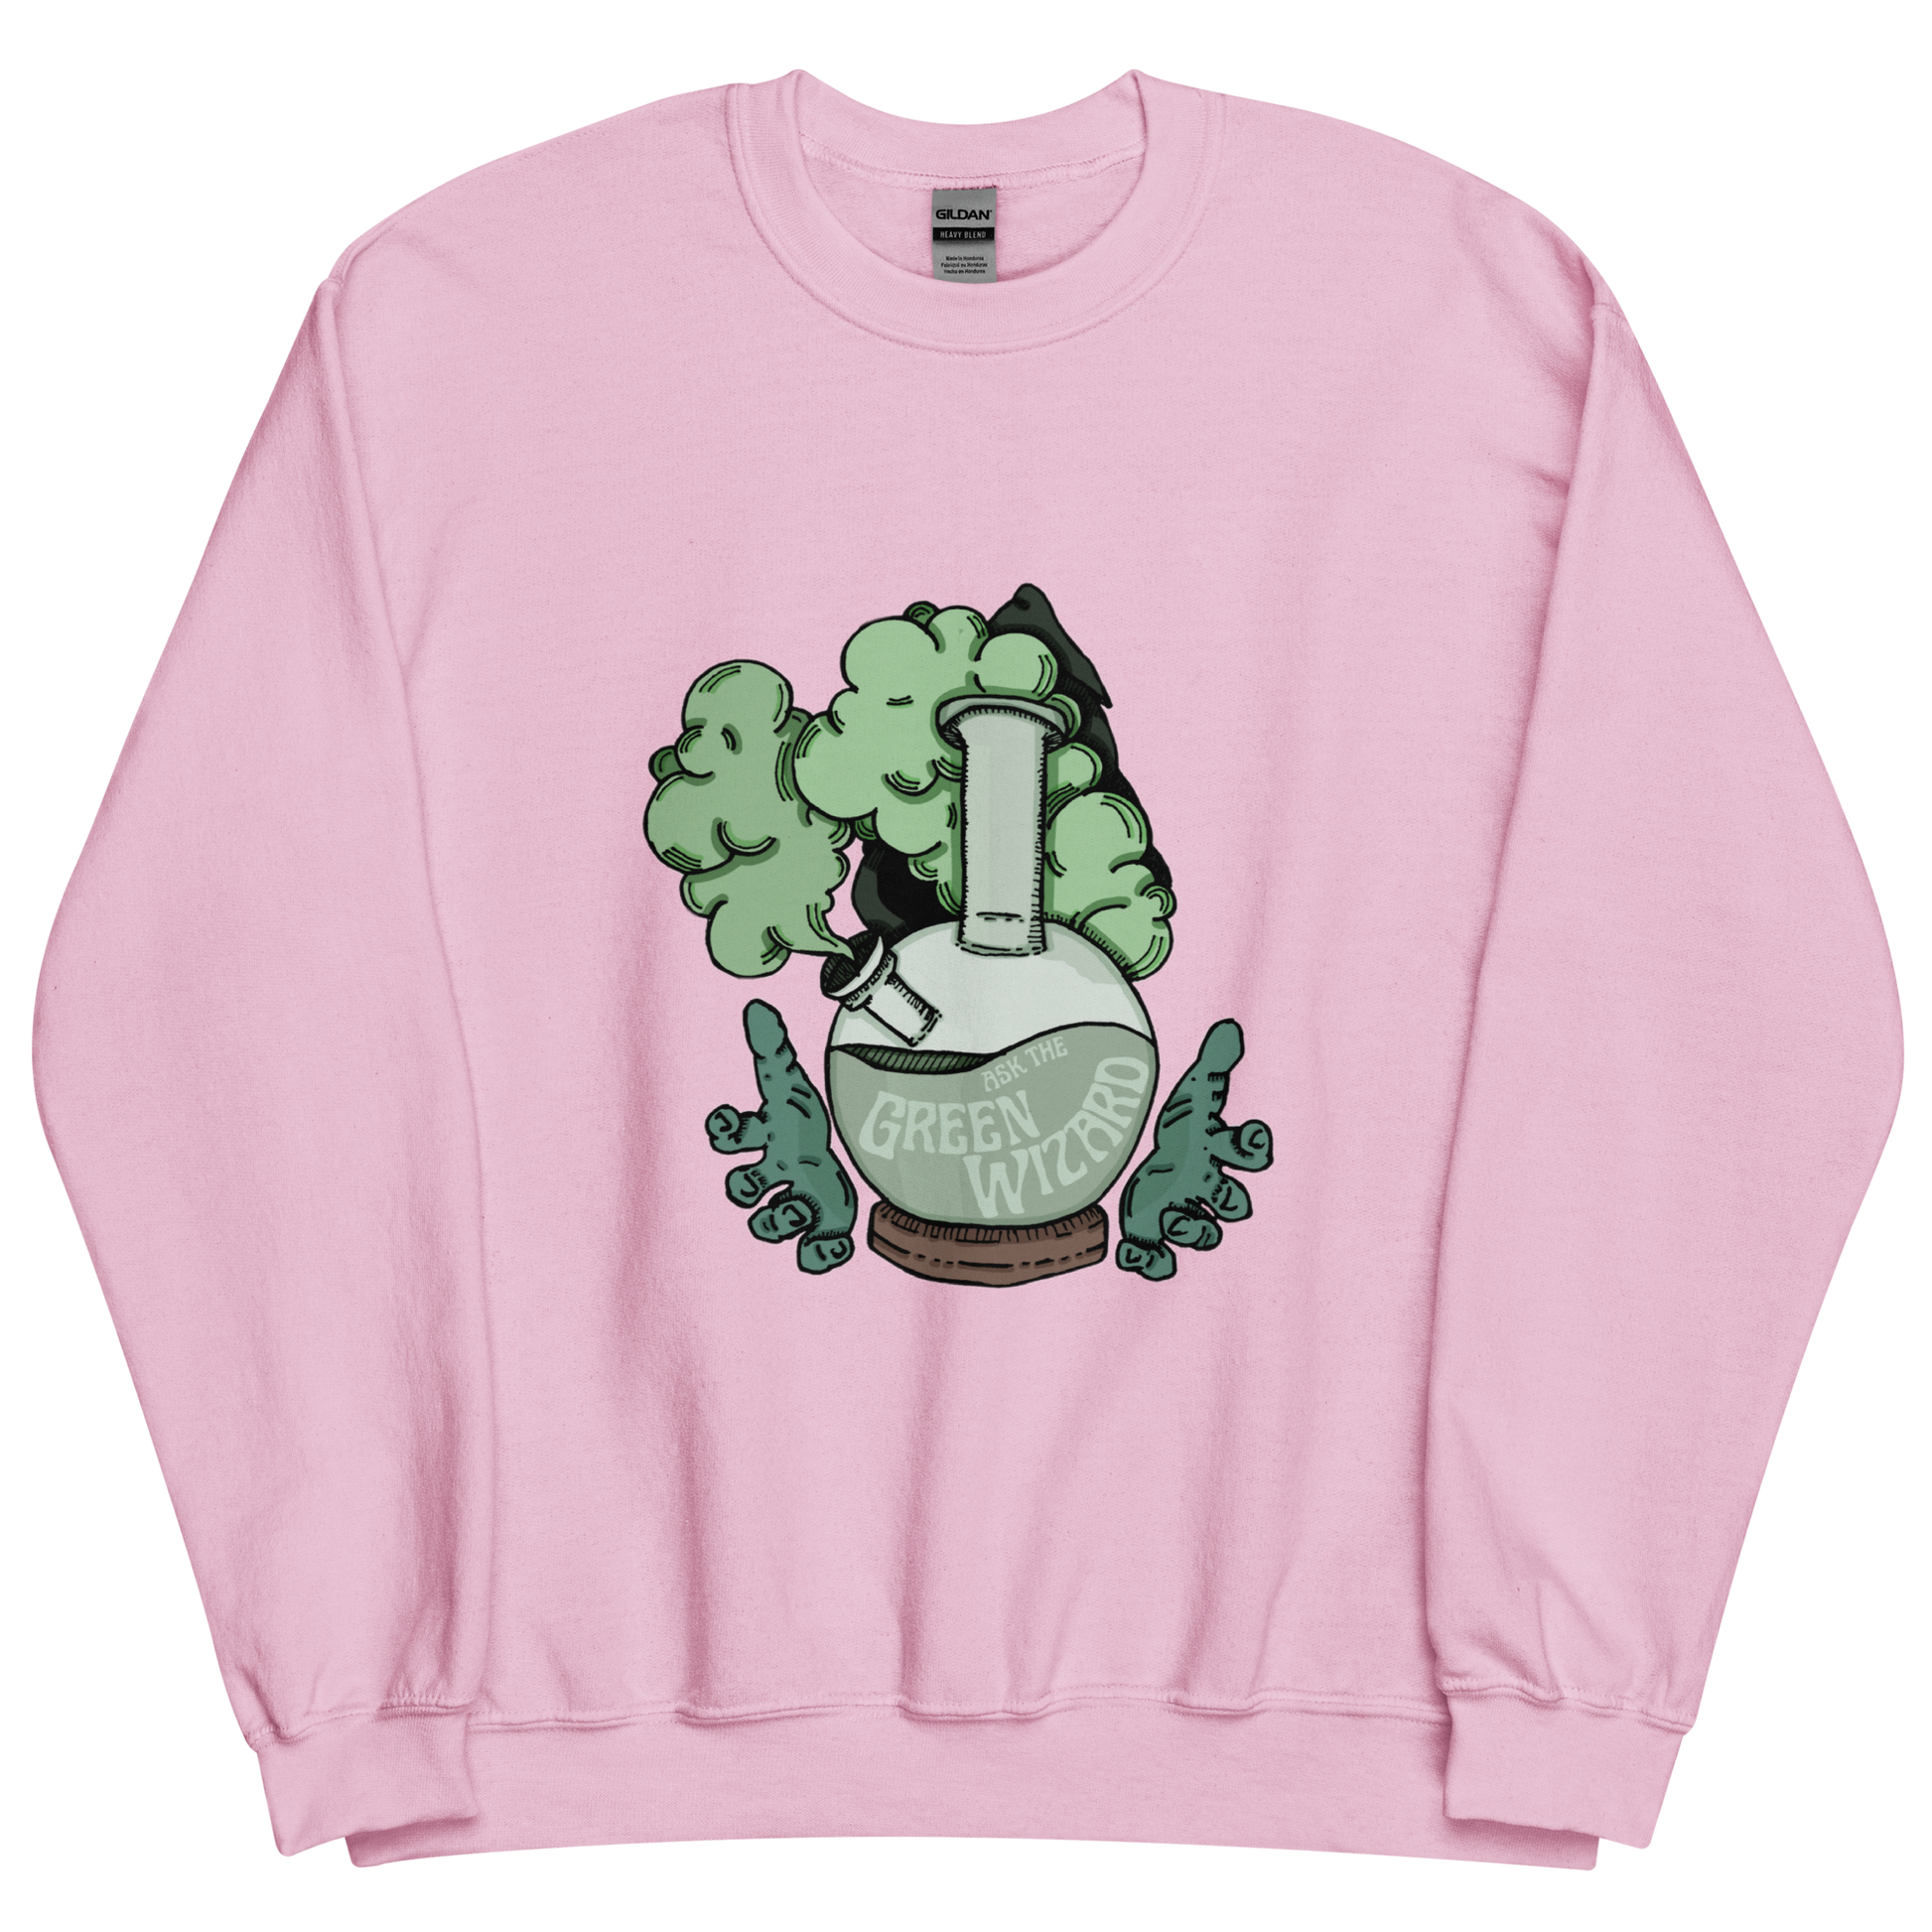 ask the green wizard sweatshirt in pink - gaslit apparel